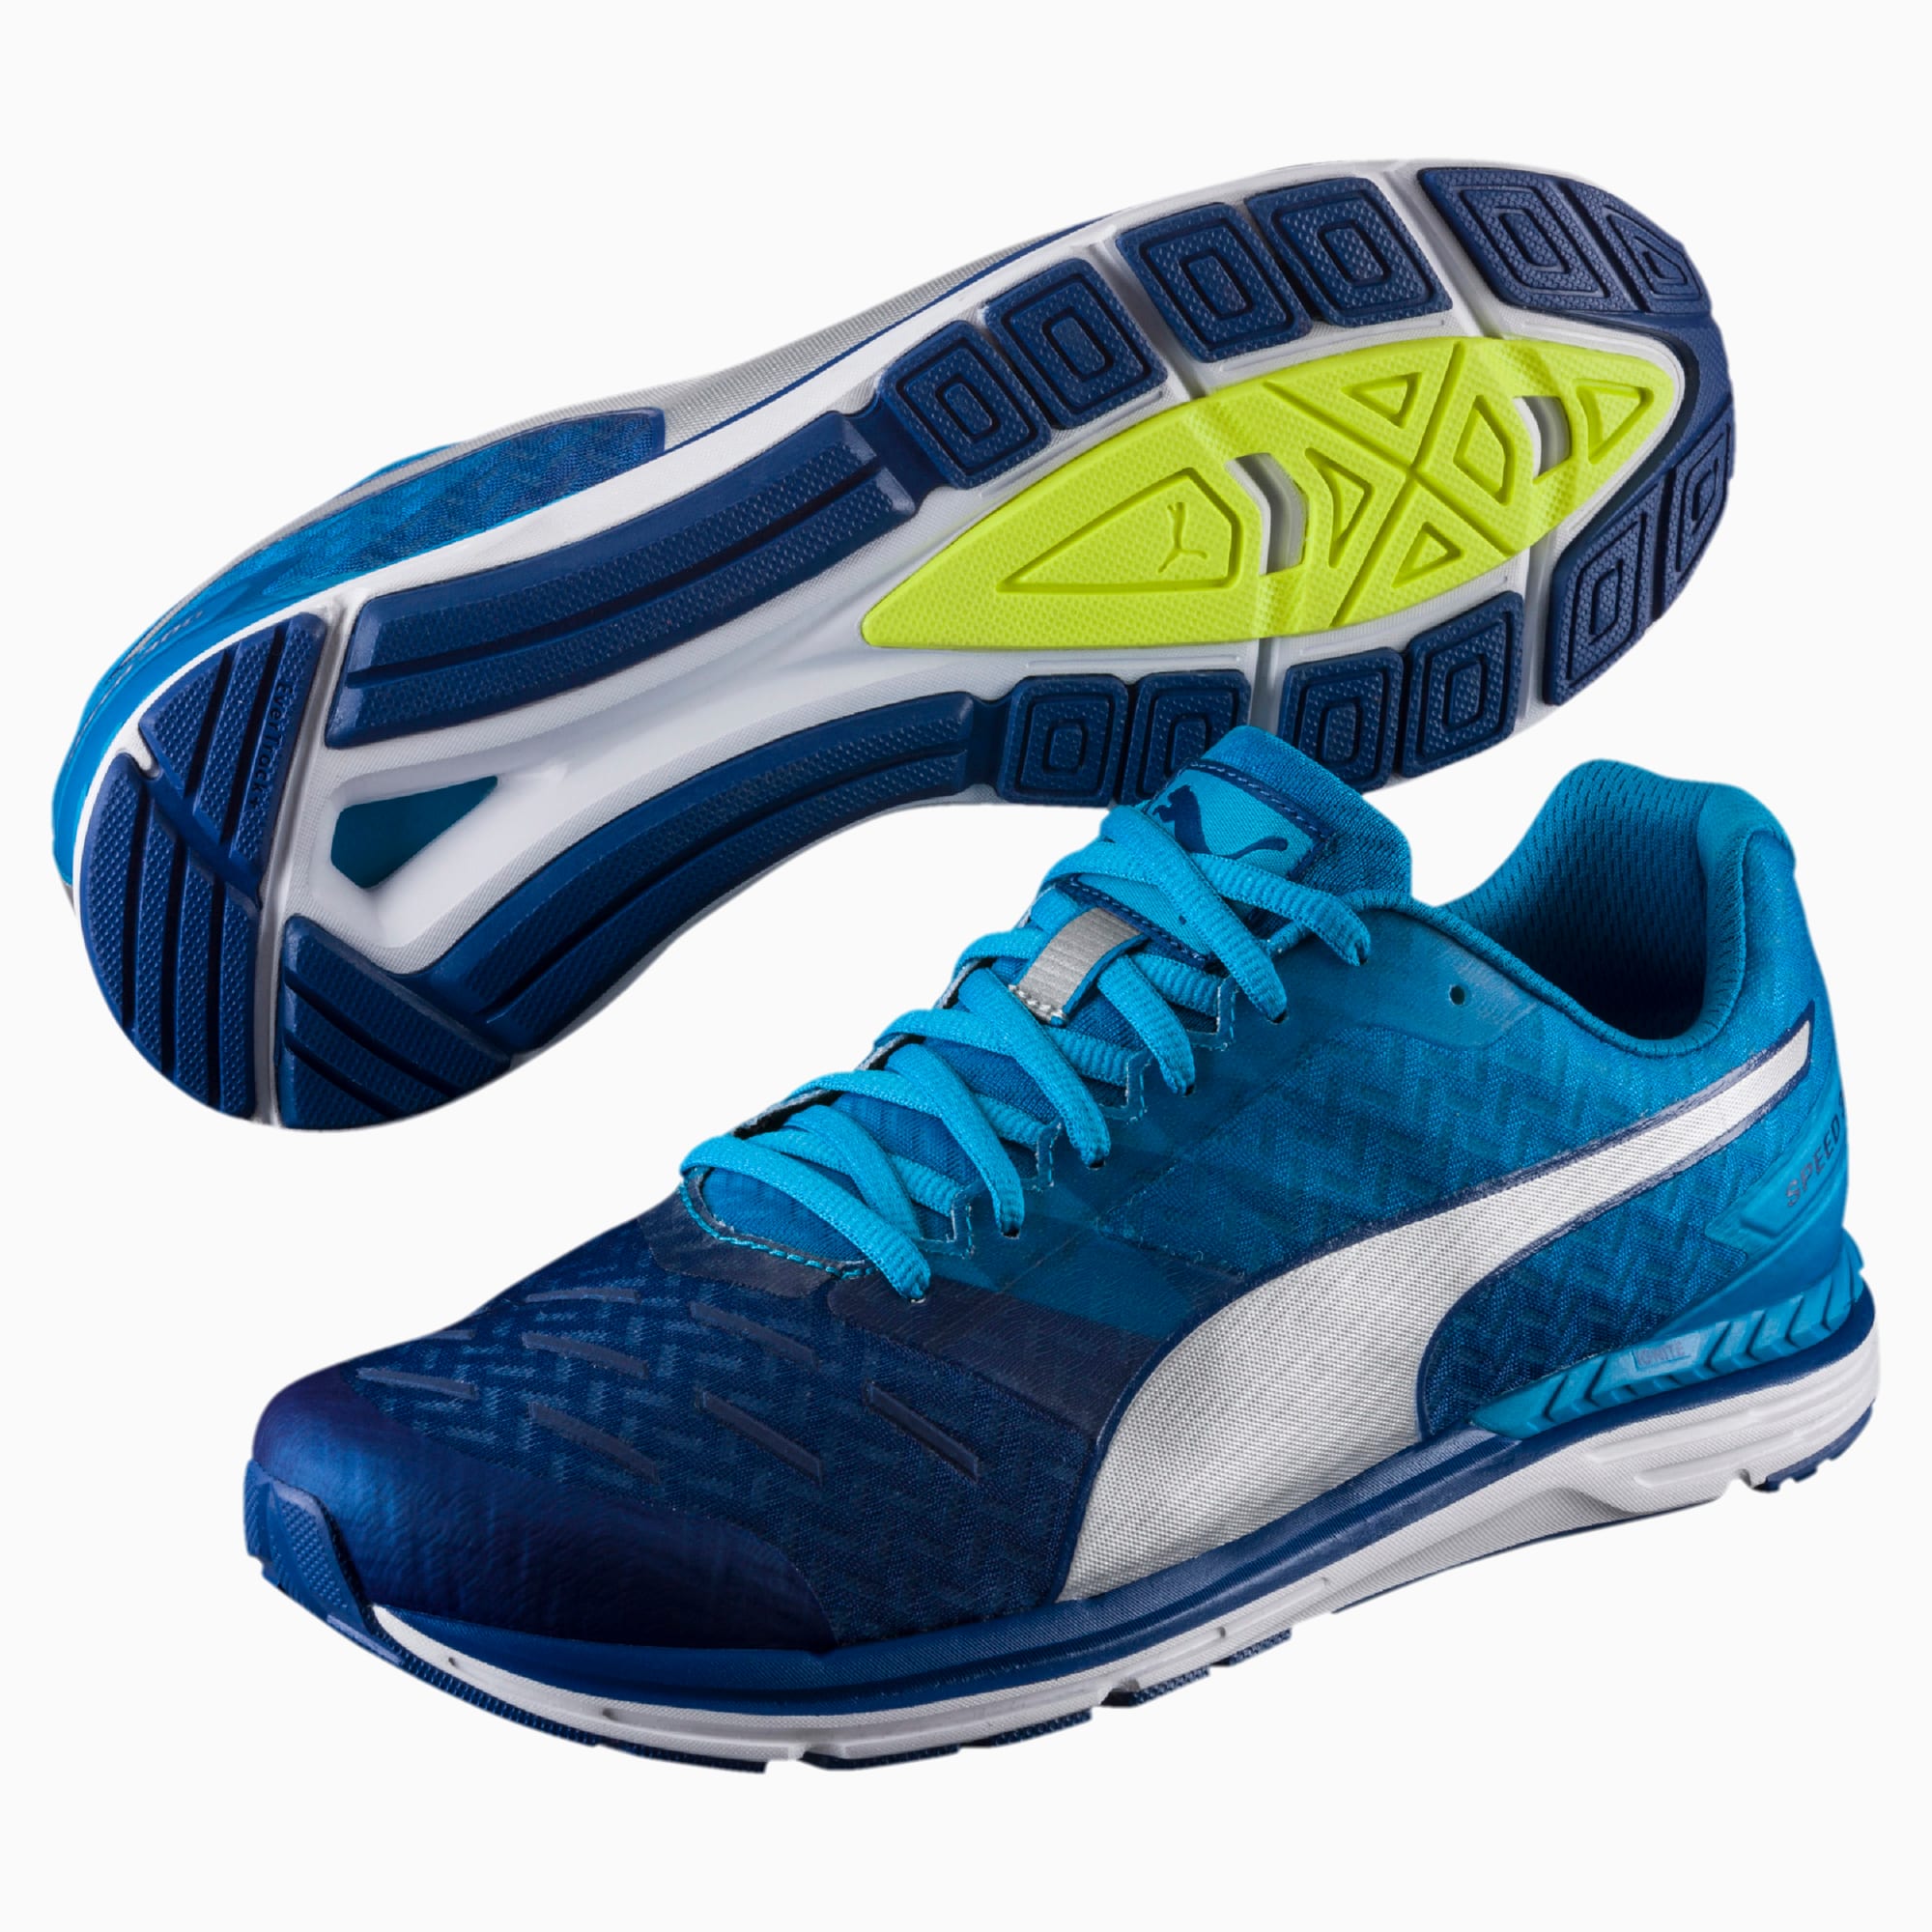 puma speed 300 ignite men's running shoes